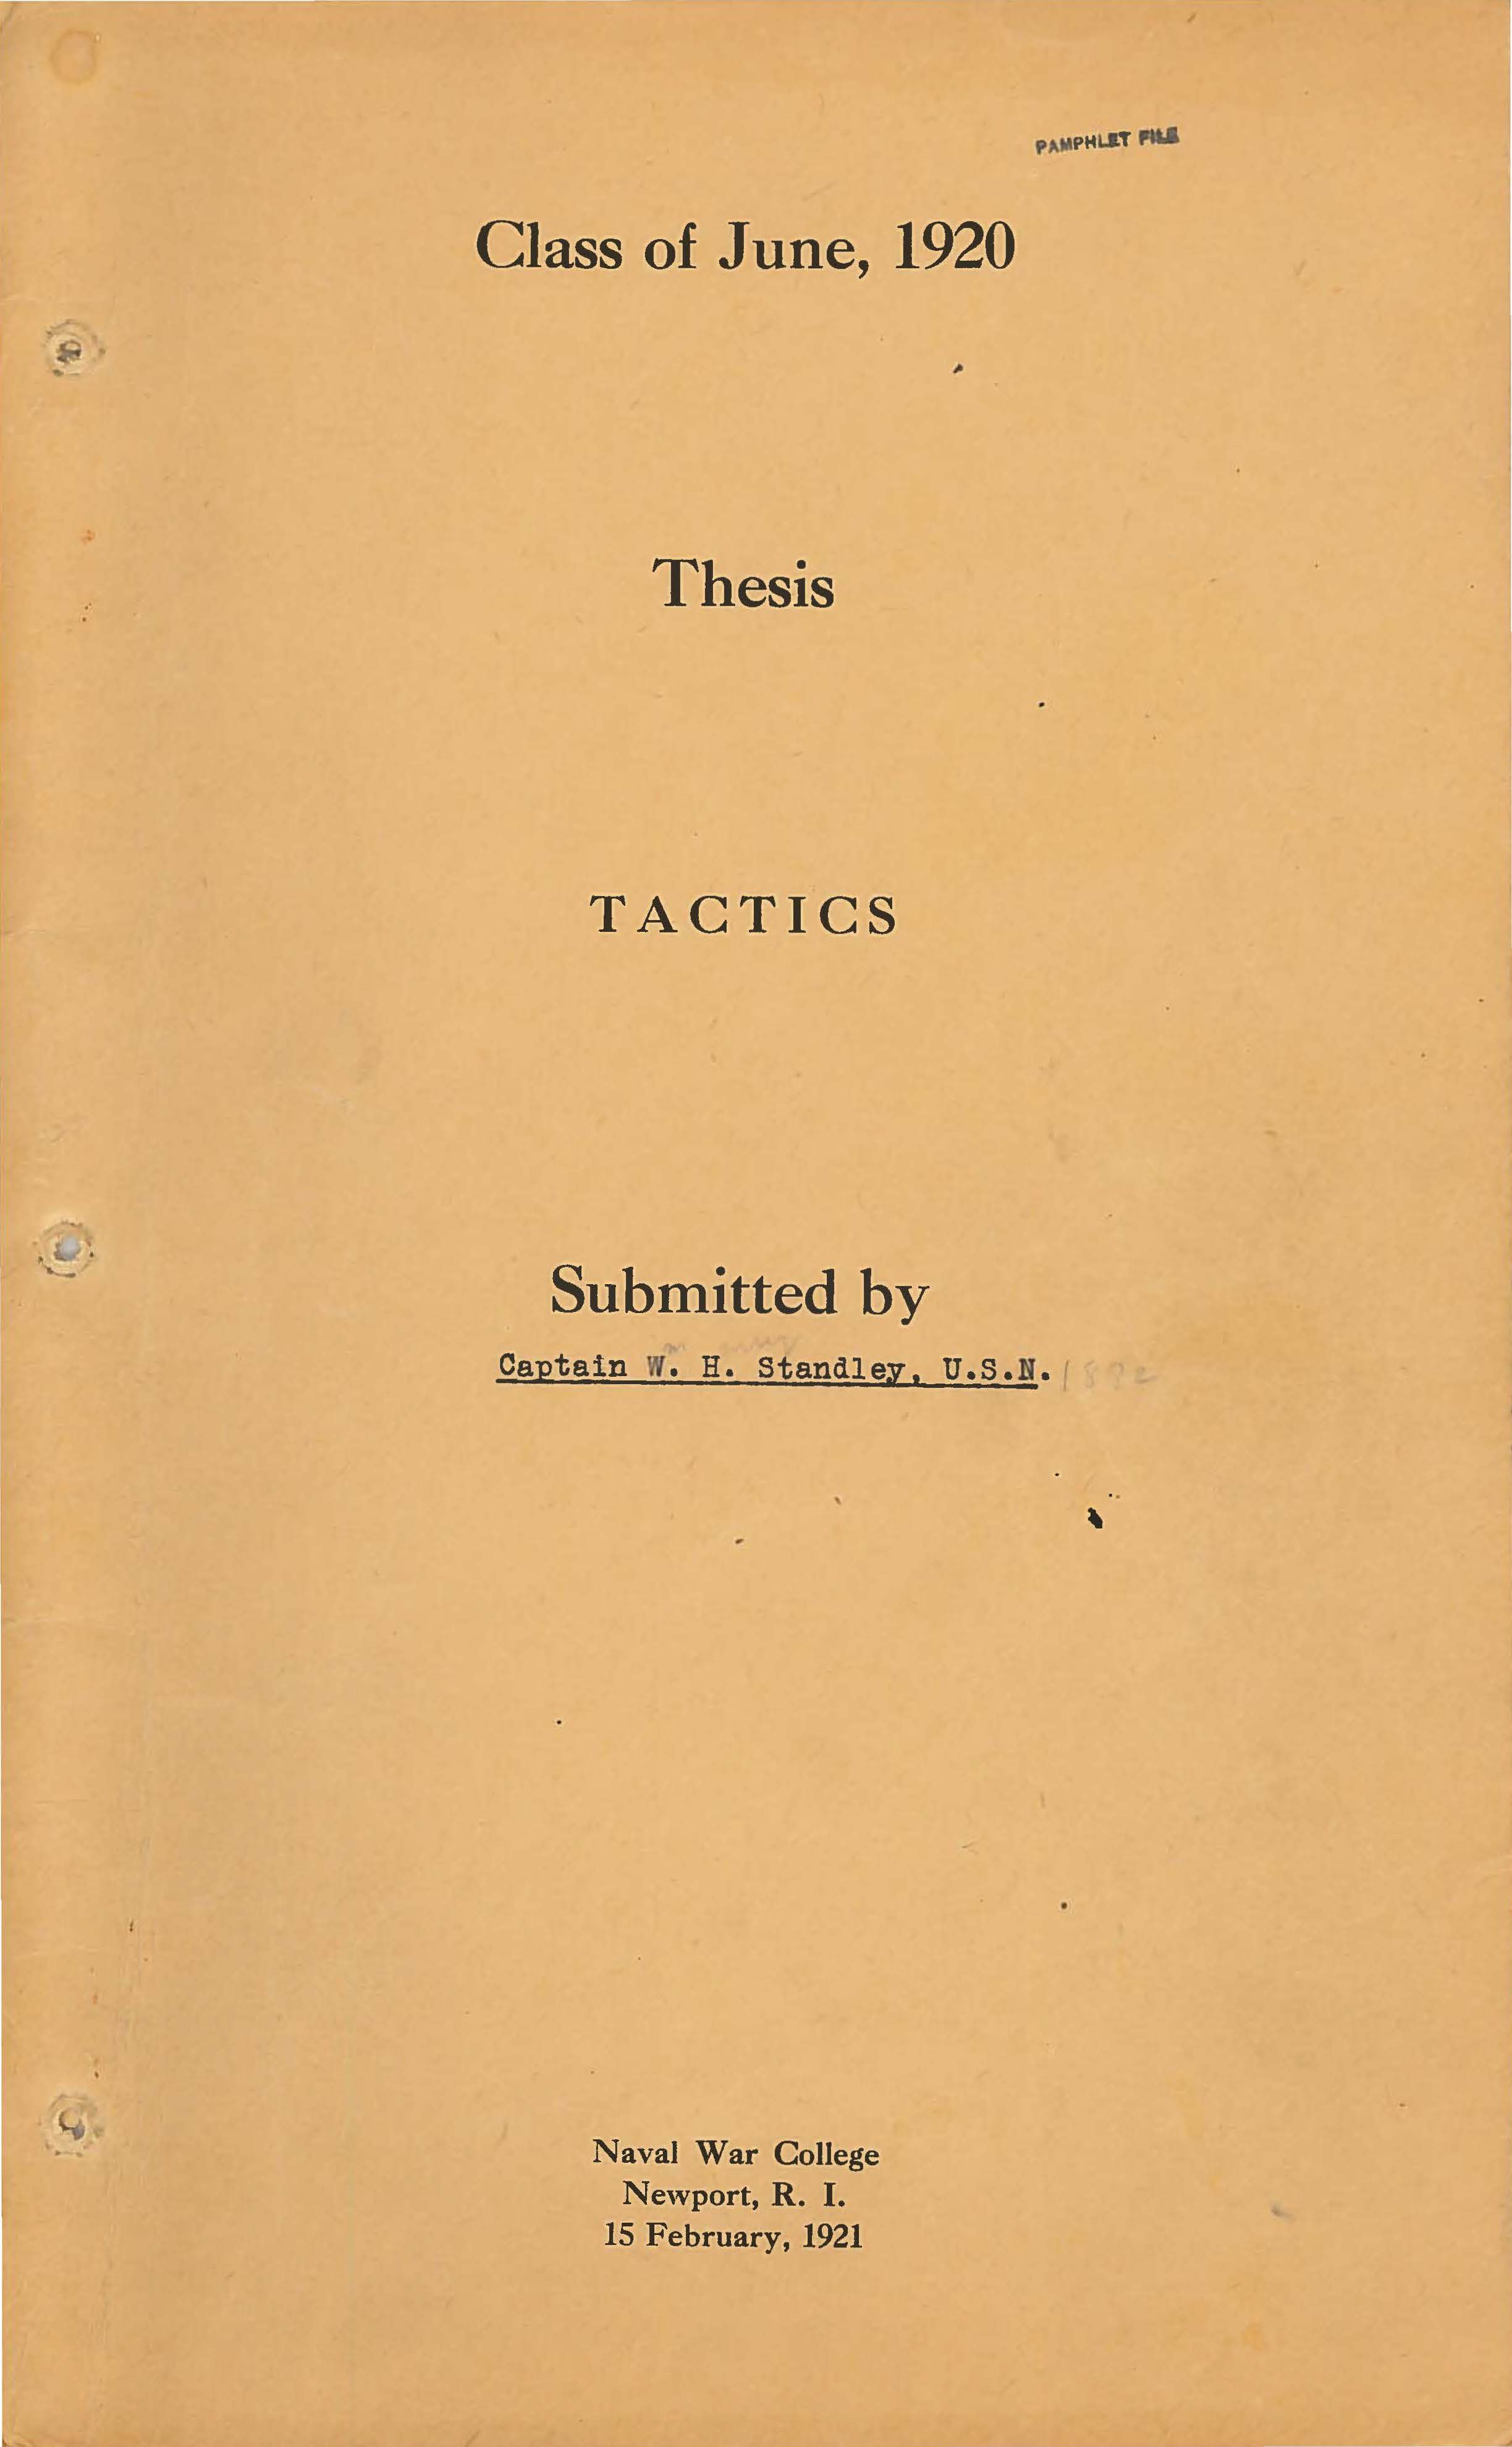 Tactics, William H. Standley